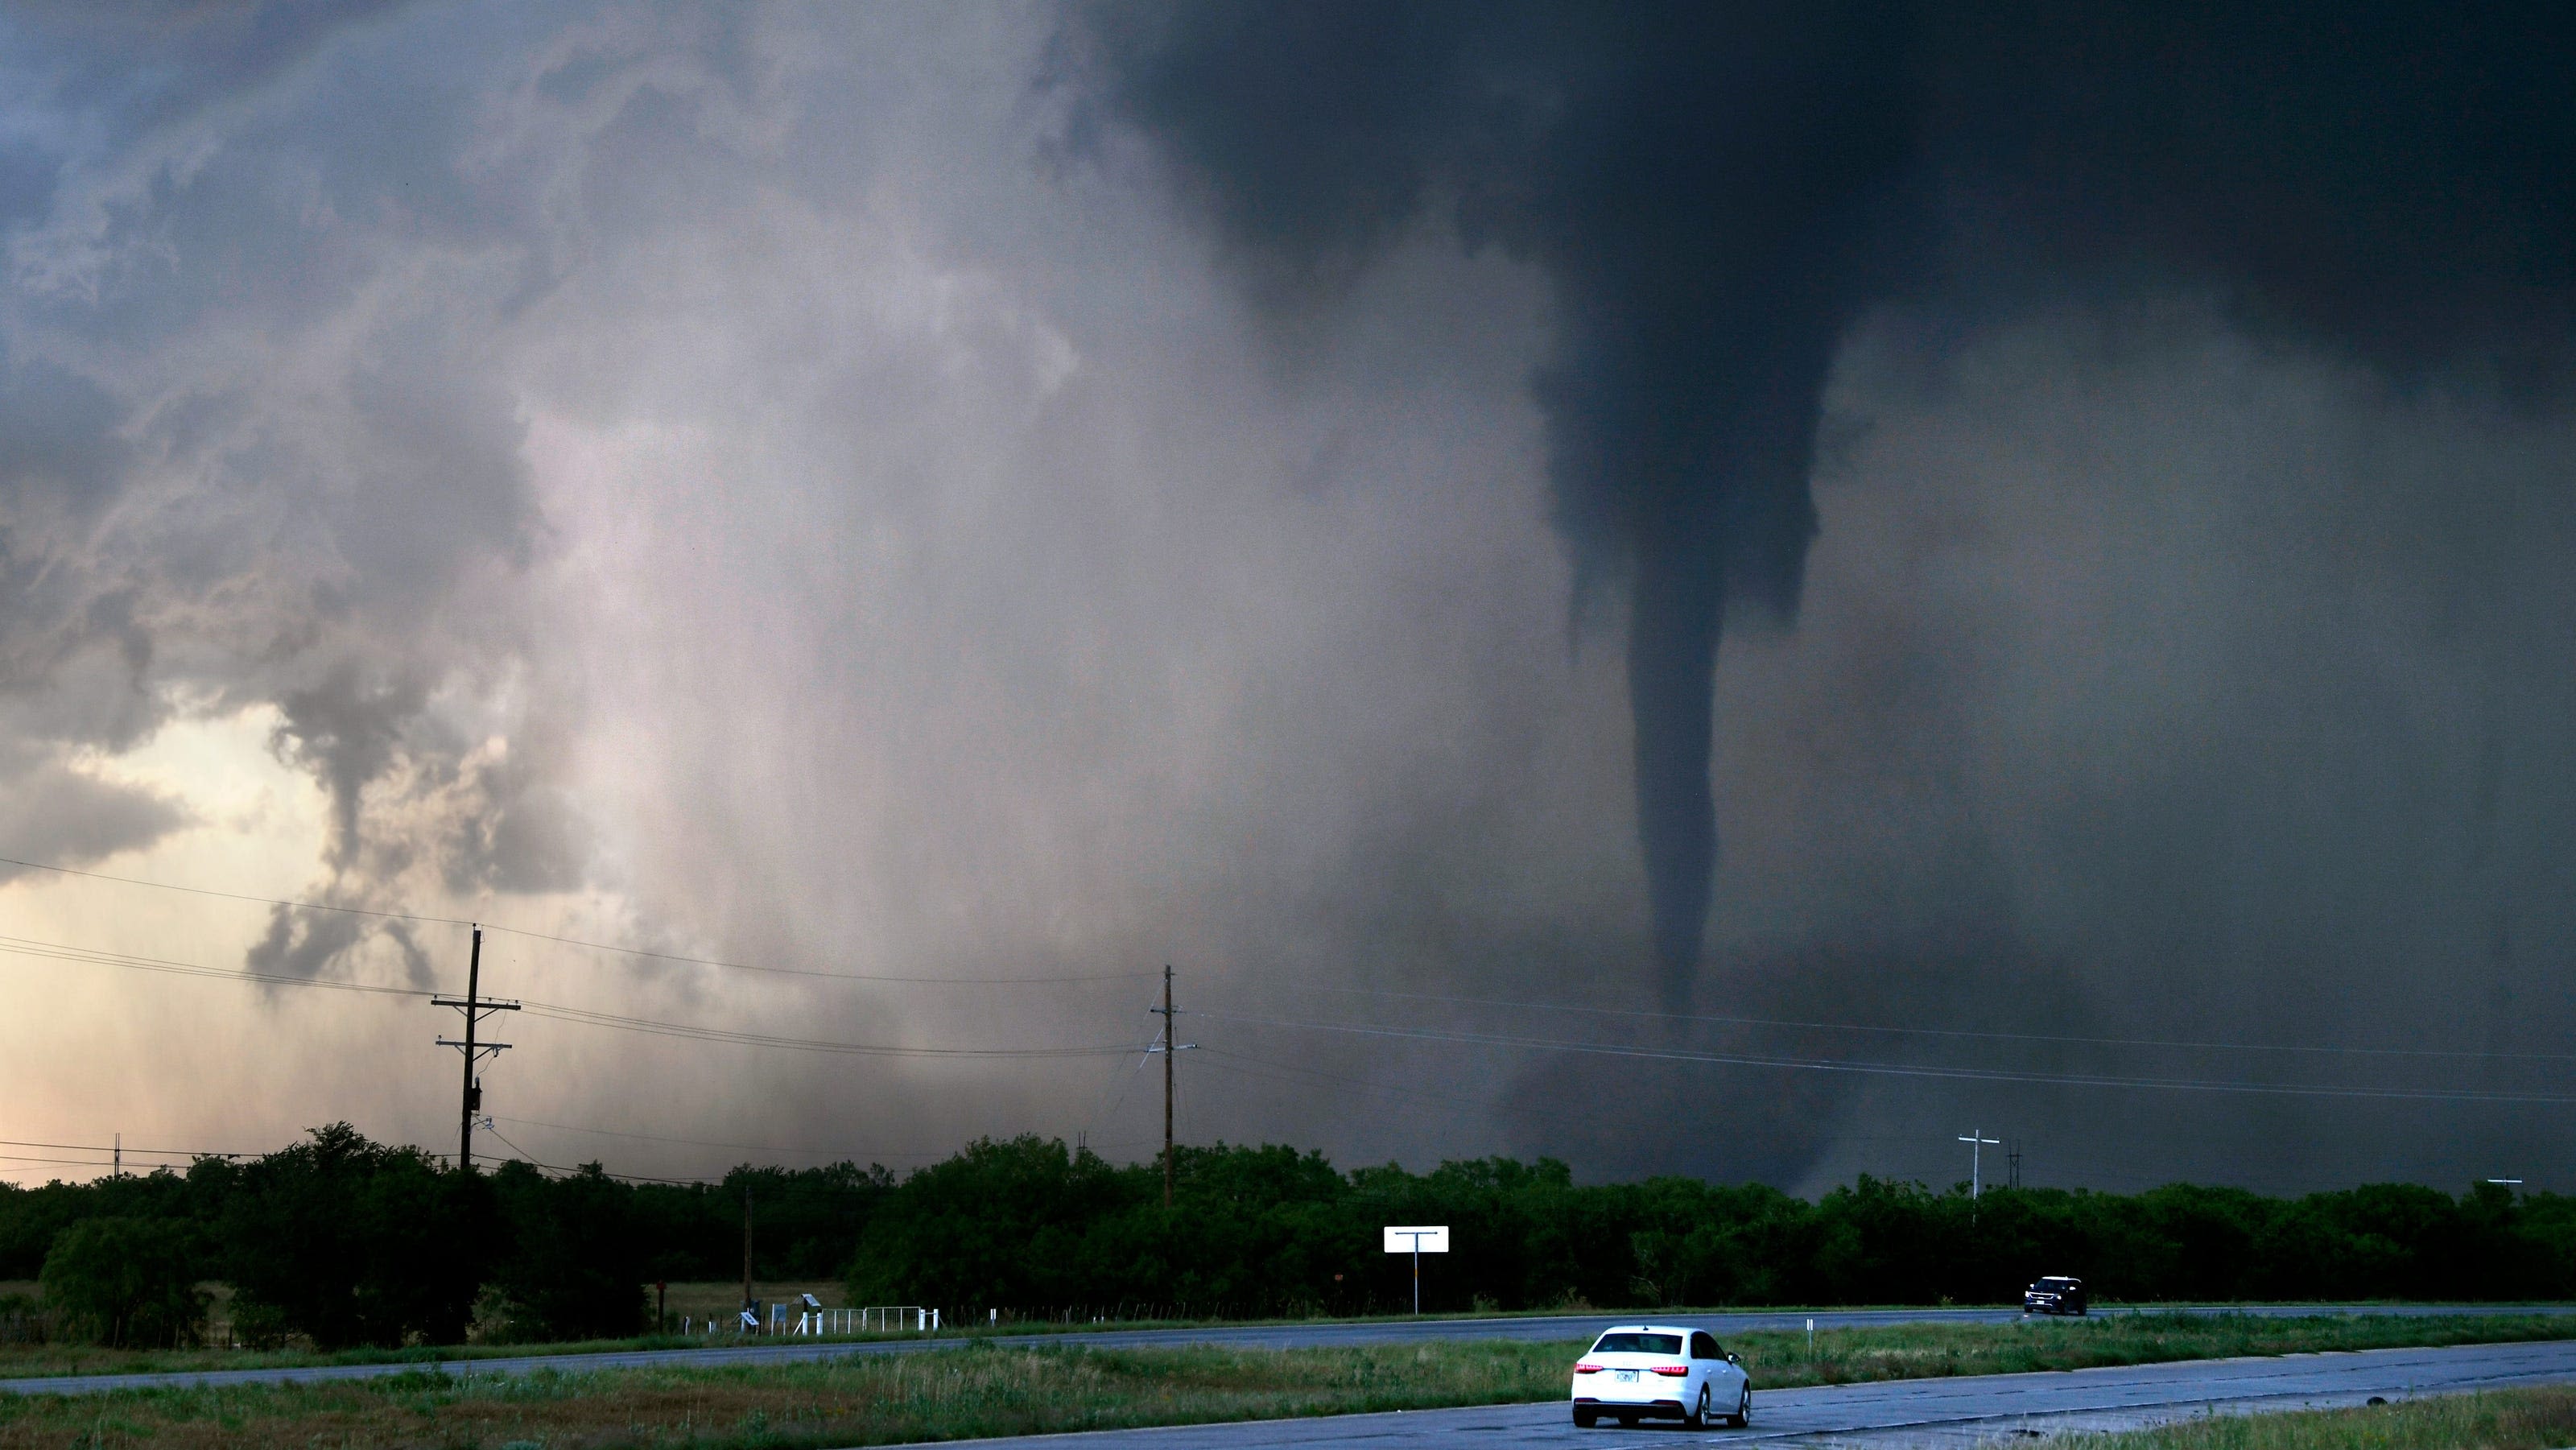 As 'Twisters' hits theaters, experts warn of increasing tornado danger